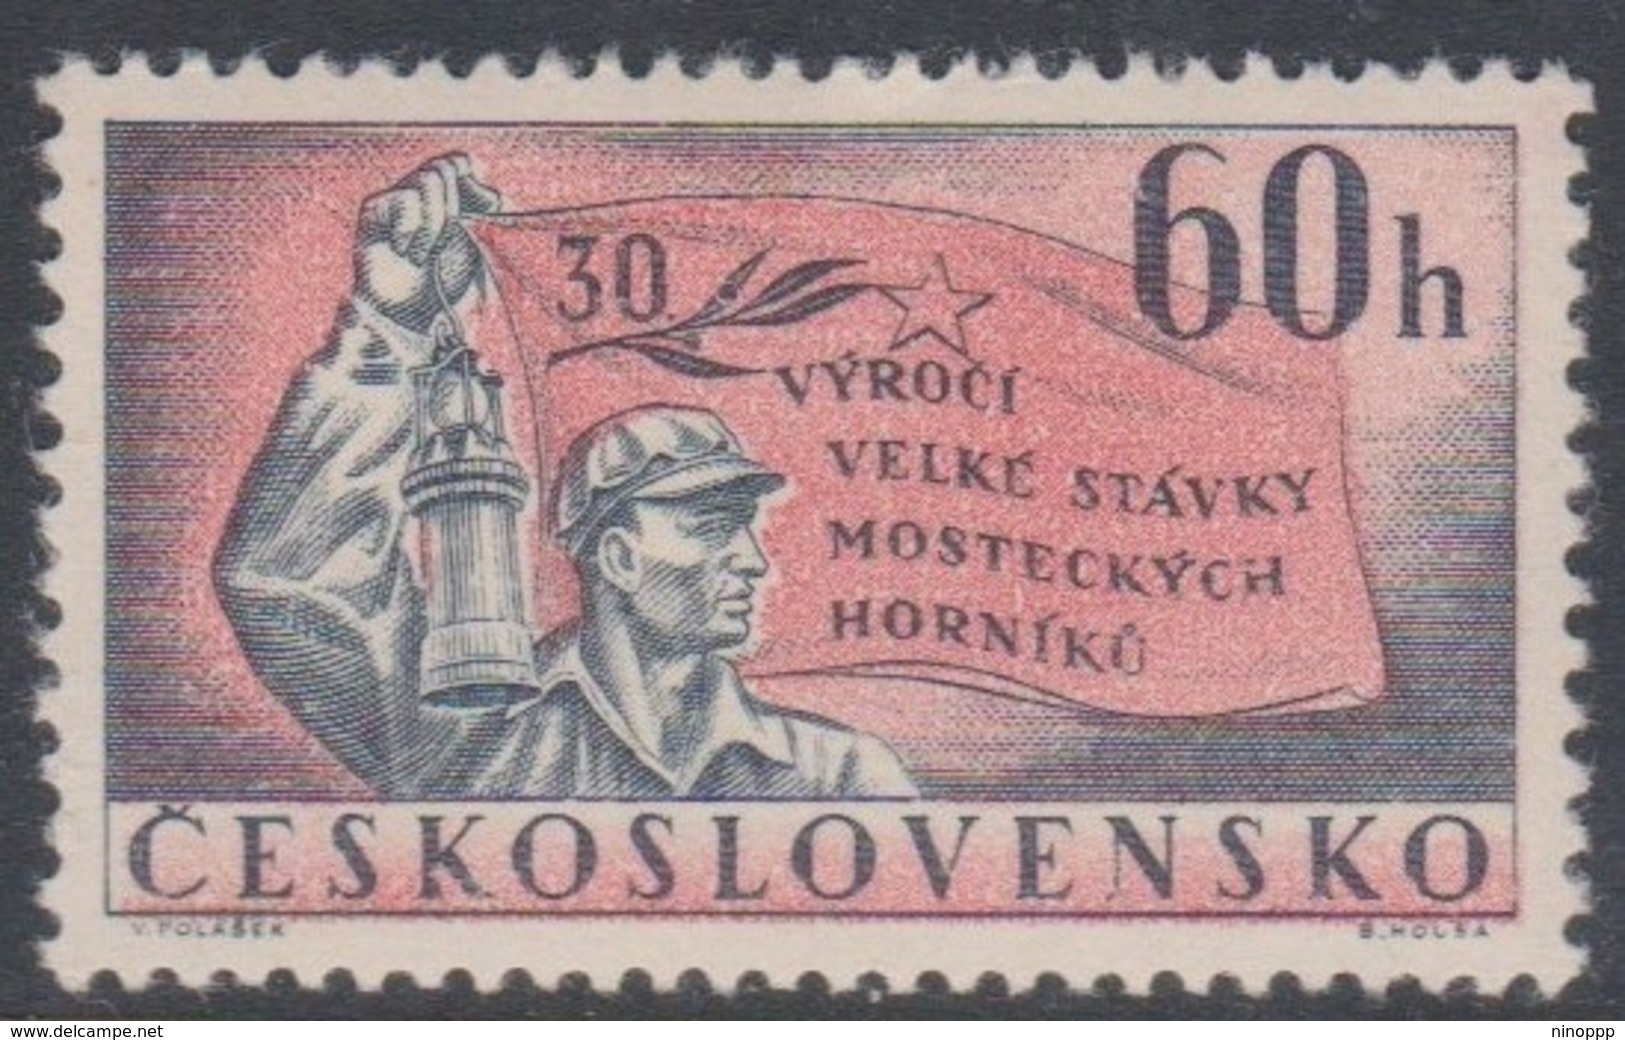 Czechoslovakia Scott 1104 1962 30th Anniversary Miners Strike, Mint Never Hinged - Unused Stamps